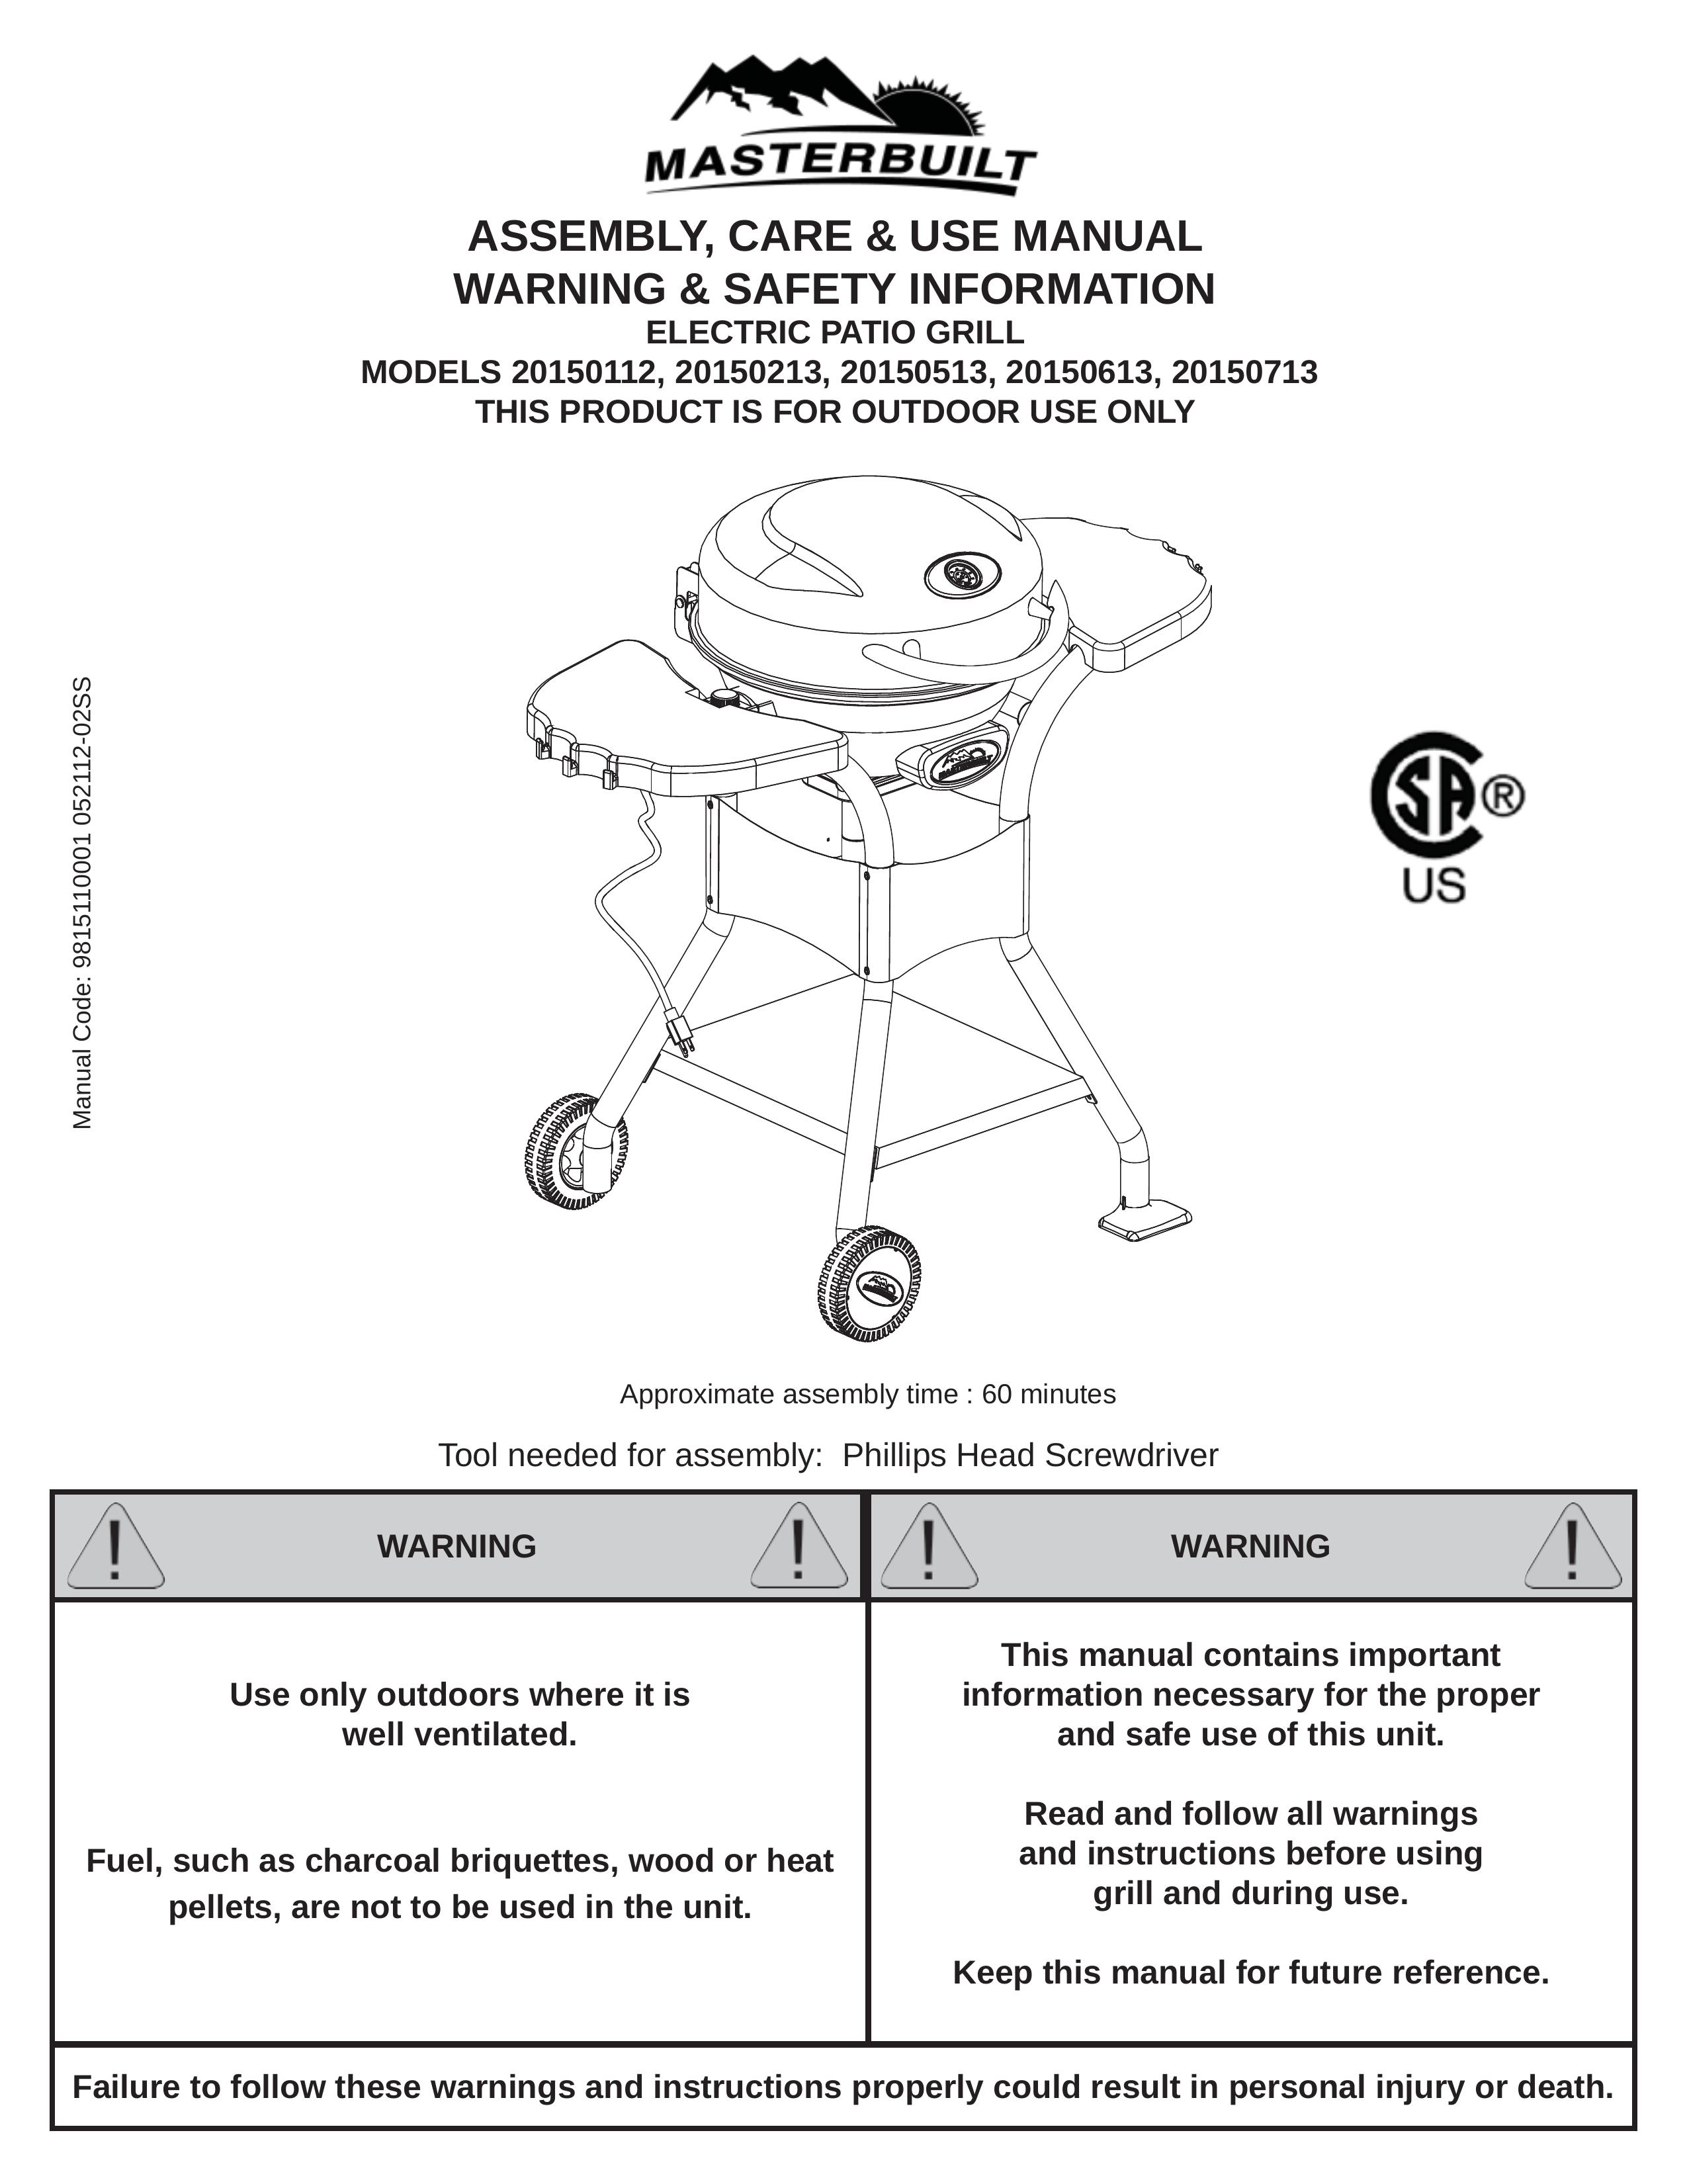 Master Bilt 20150613 Electric Grill User Manual